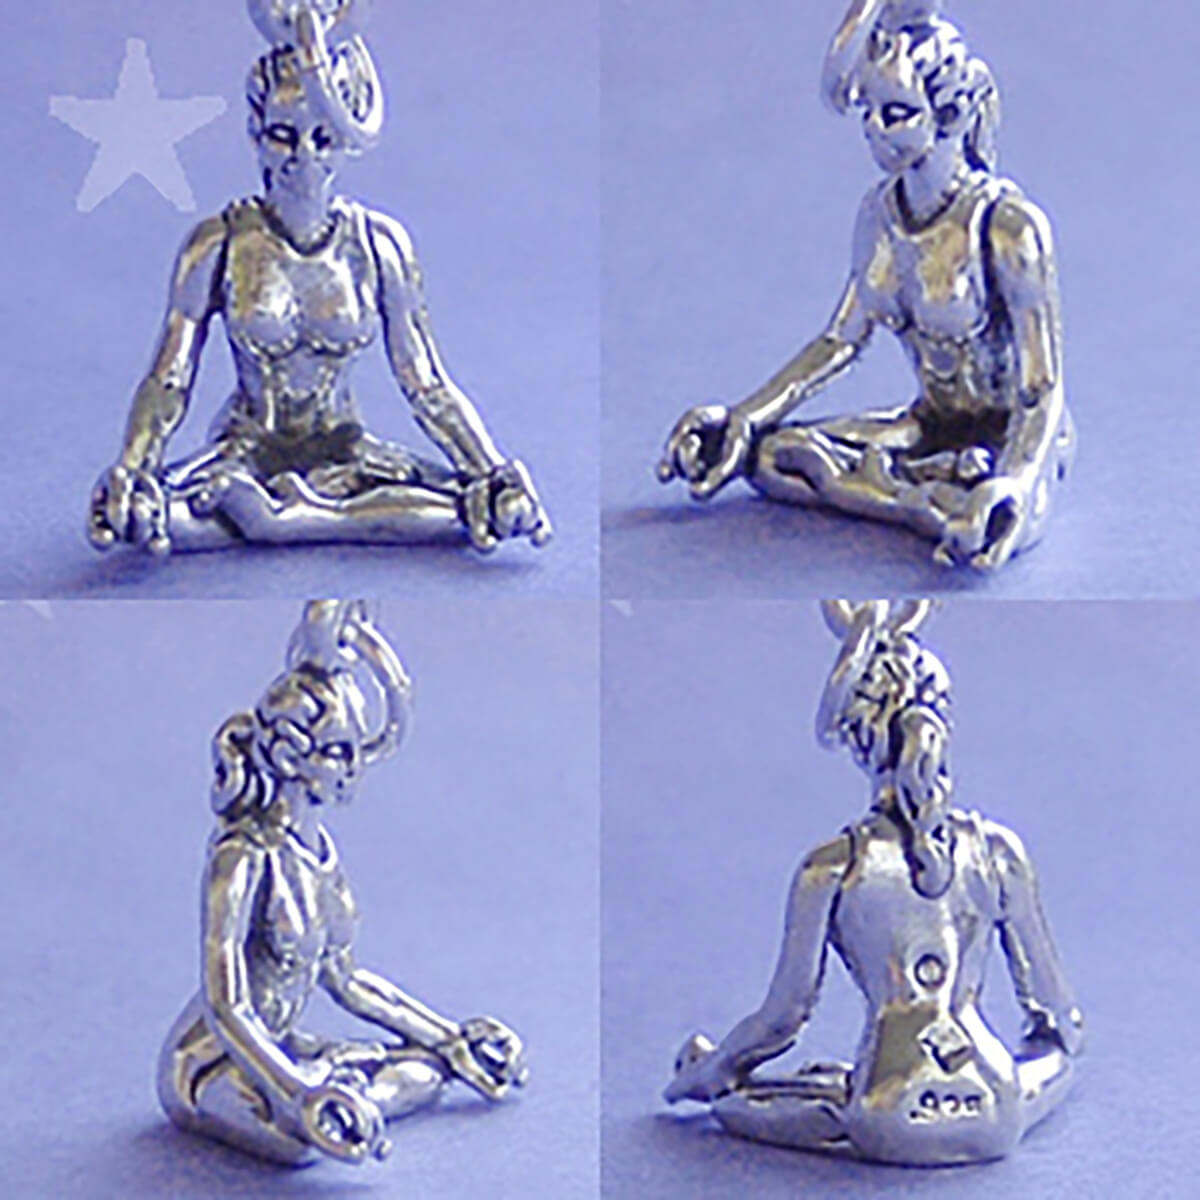 Charmarama sterling silver yoga charm lotus position pendant